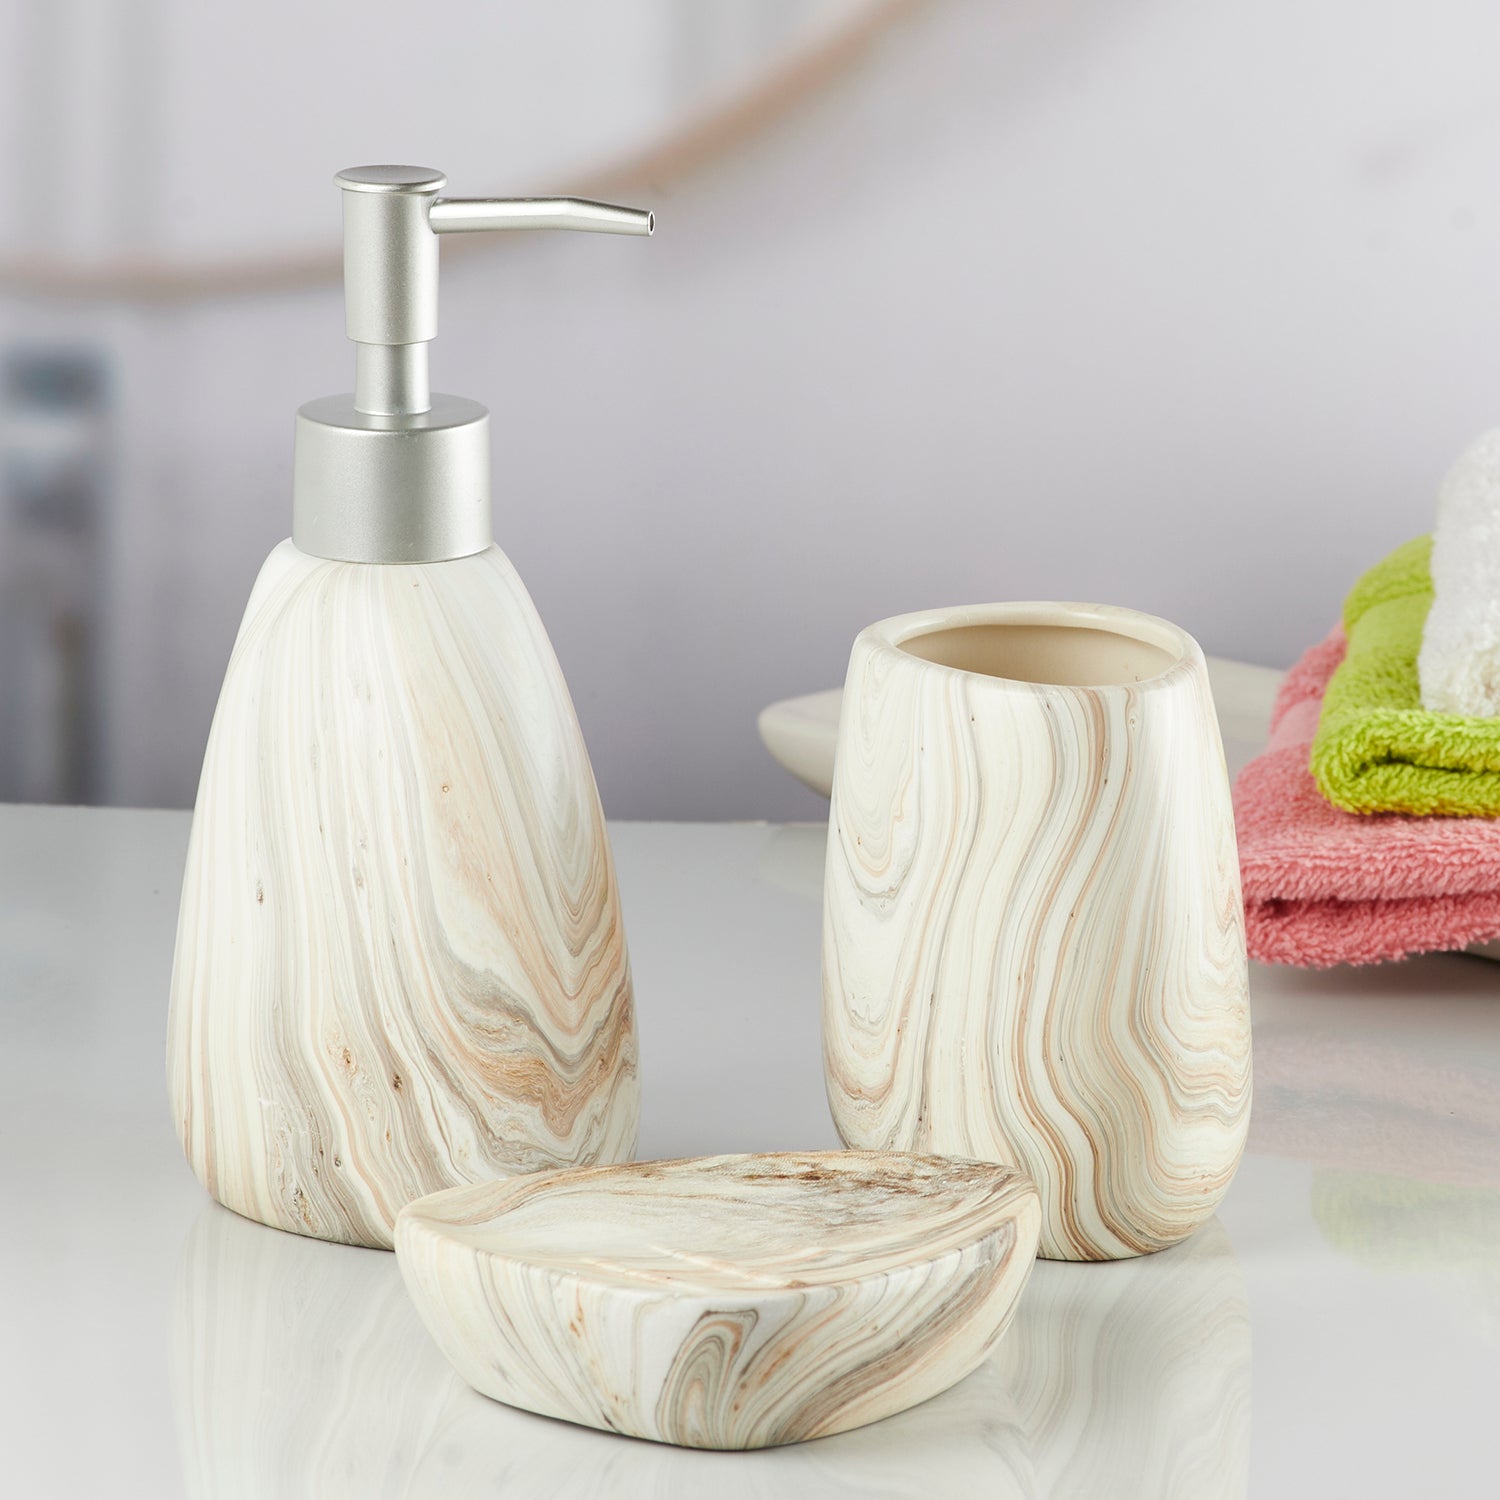 Ceramic Bathroom Accessories Set of 3 Bath Set with Soap Dispenser (7646)